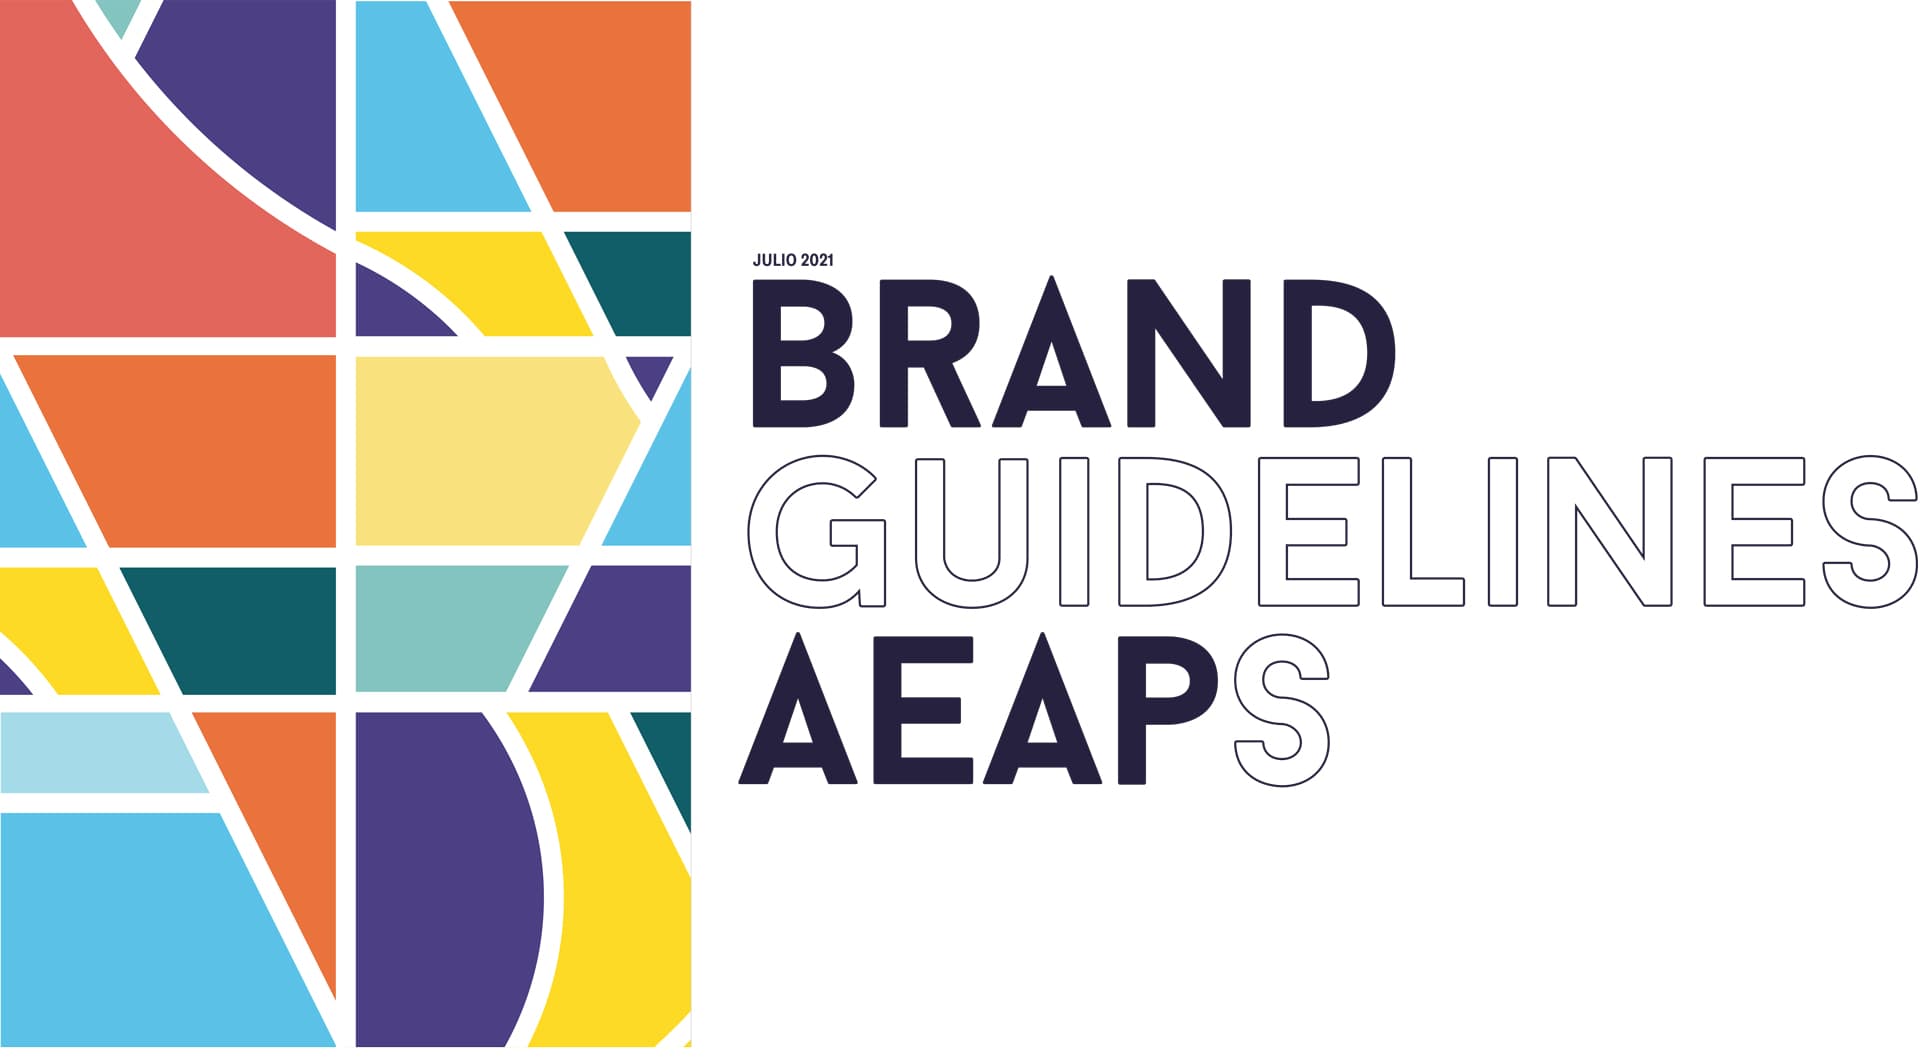 Brand_guidelines_aeaps